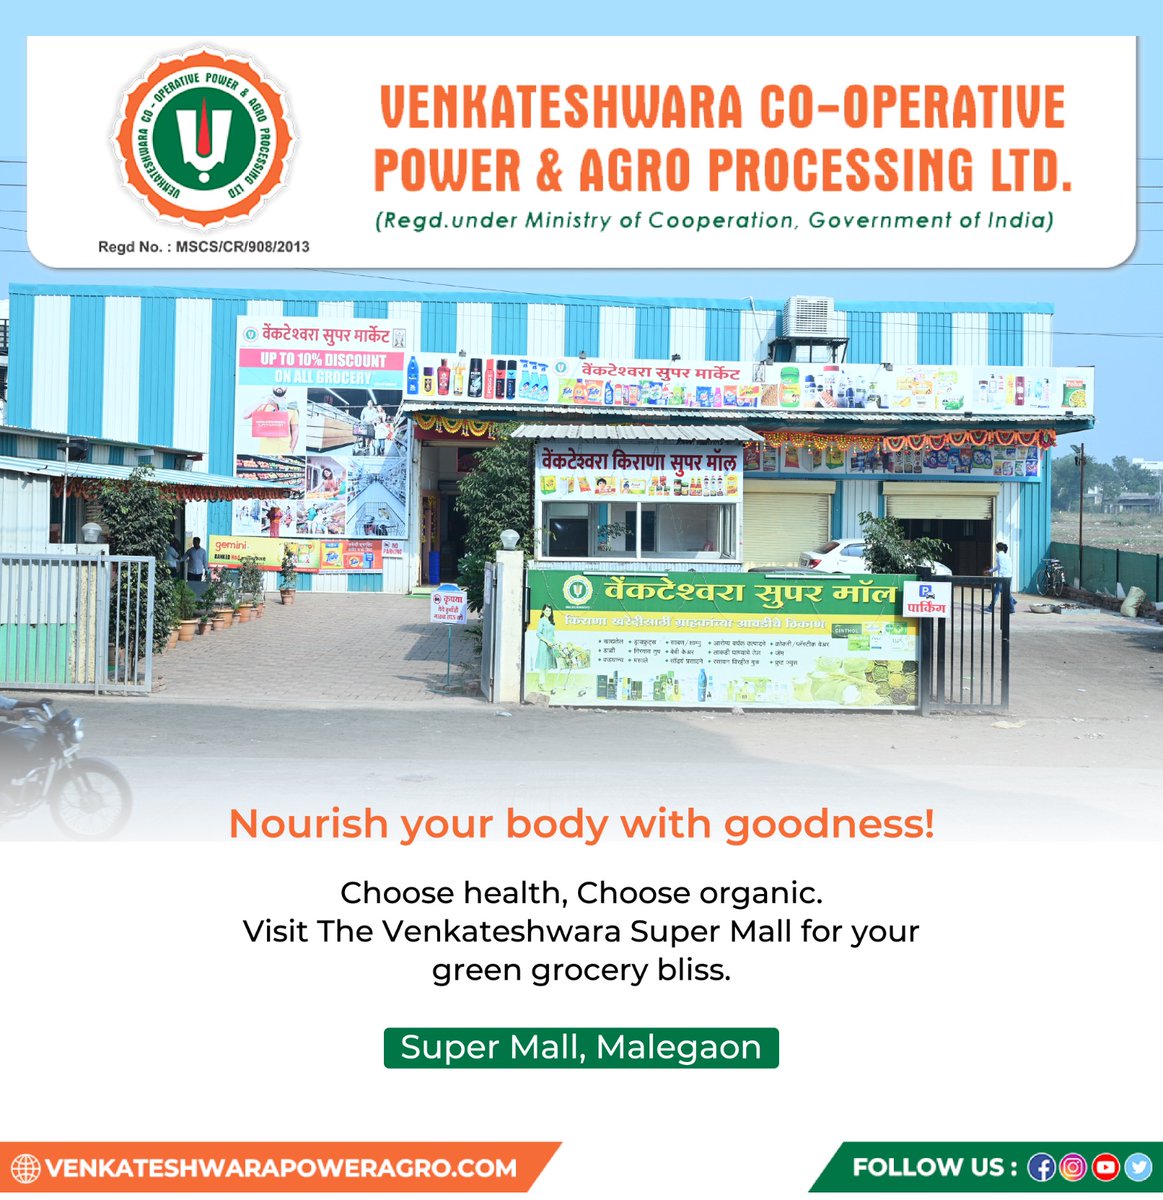 Visit The Venkateshwara Super Mall for your green grocery bliss
.
.
.
#VenkateshwaraCooperative #PowerAndAgroProcessing #SahakarseSamriddhi #GreenGroceryBliss #OrganicLiving #SuperMallWellness #ChooseHealth #SuperMallOrganics #NourishYourBody #OrganicChoices #SuperMallHealth